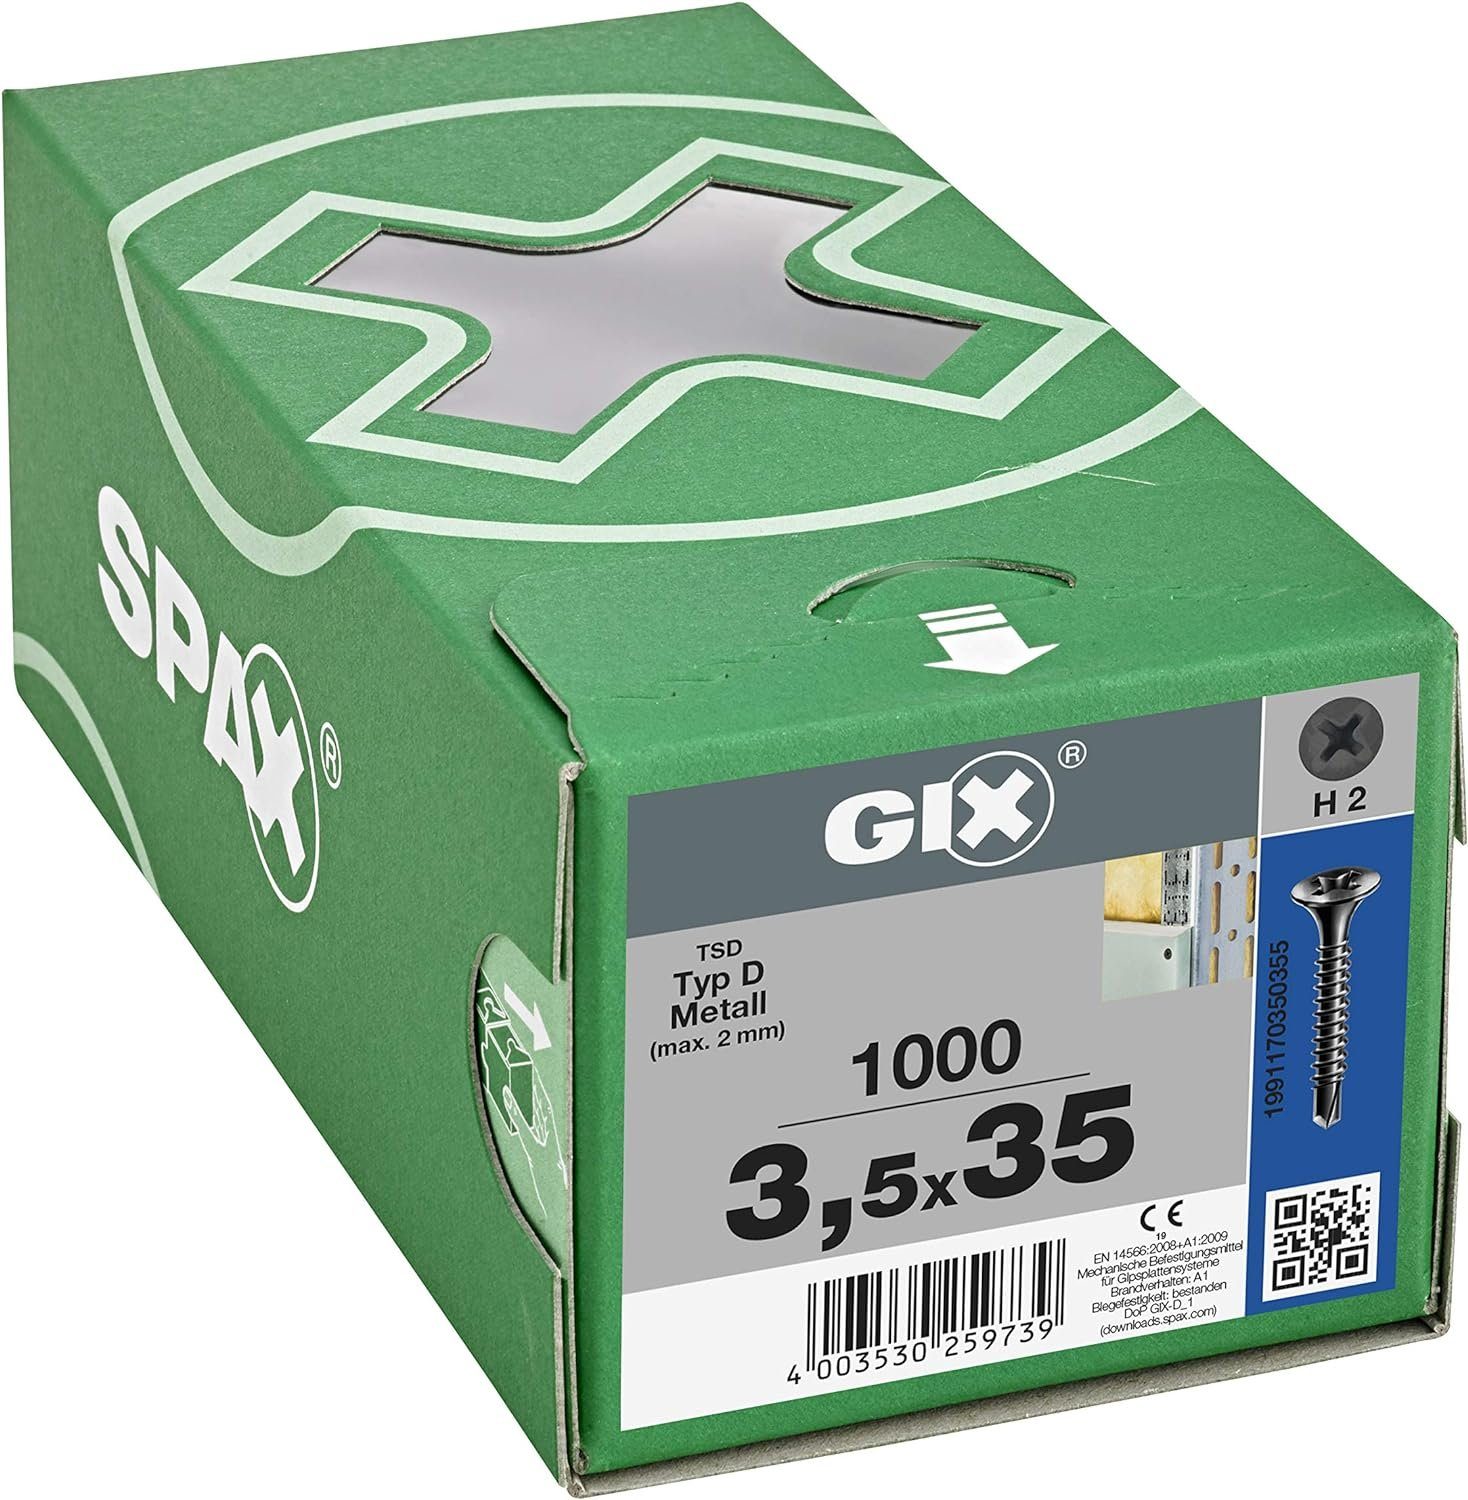 SPAX Schraube GIX-D Packung, (1000 St)